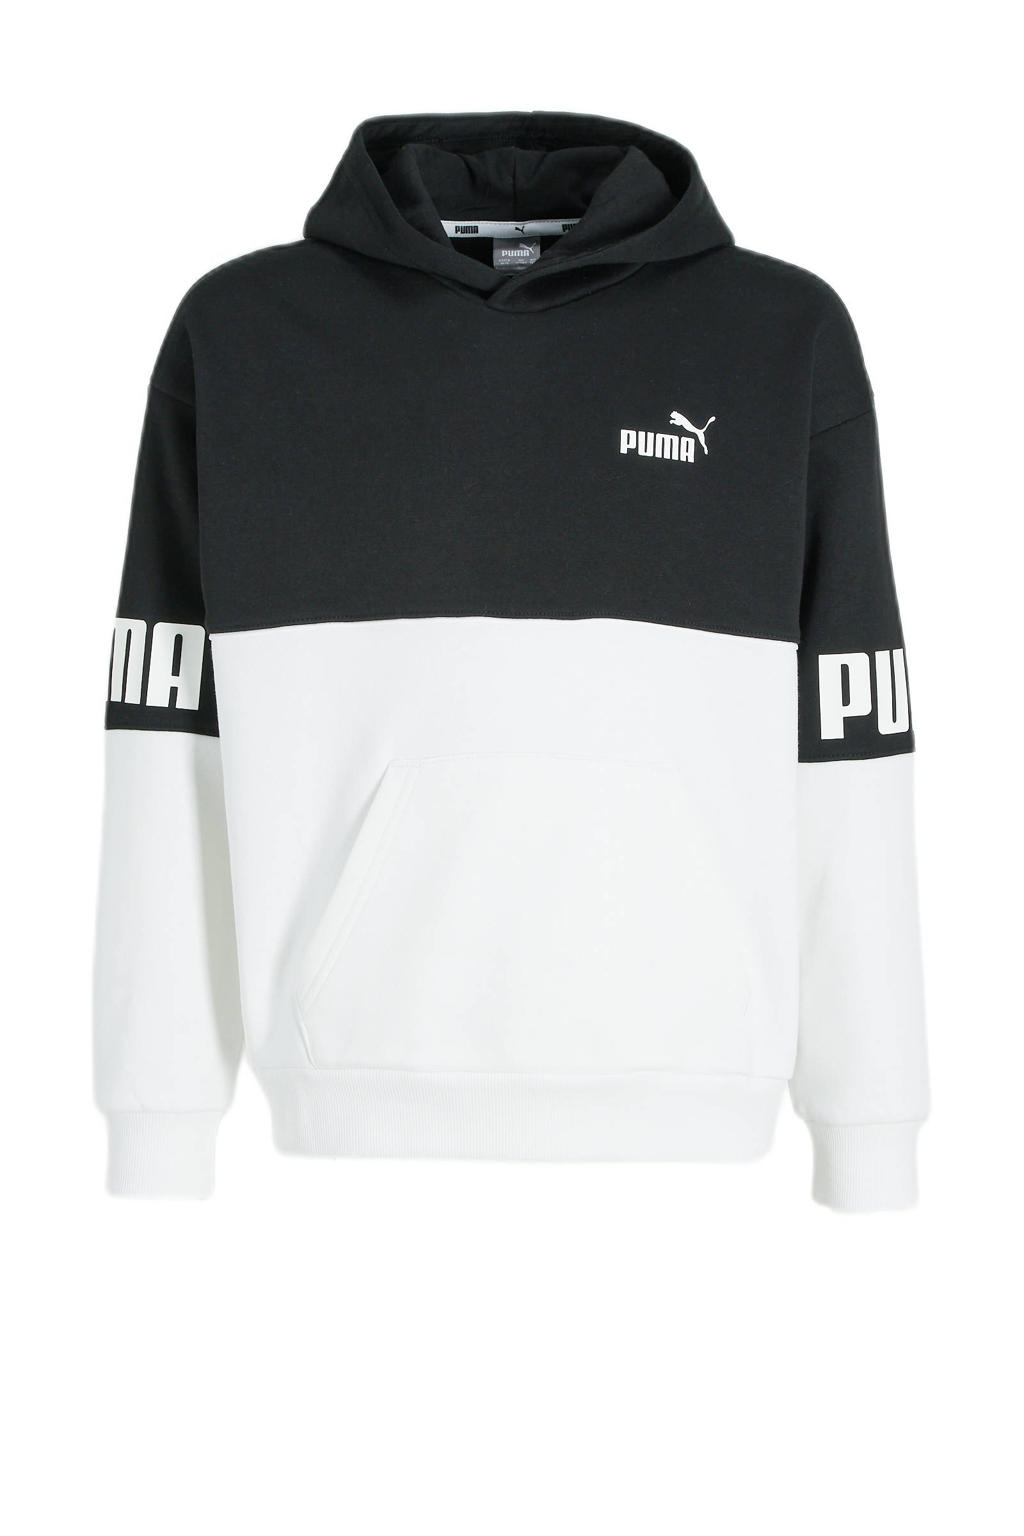 Puma sweater zwart/wit